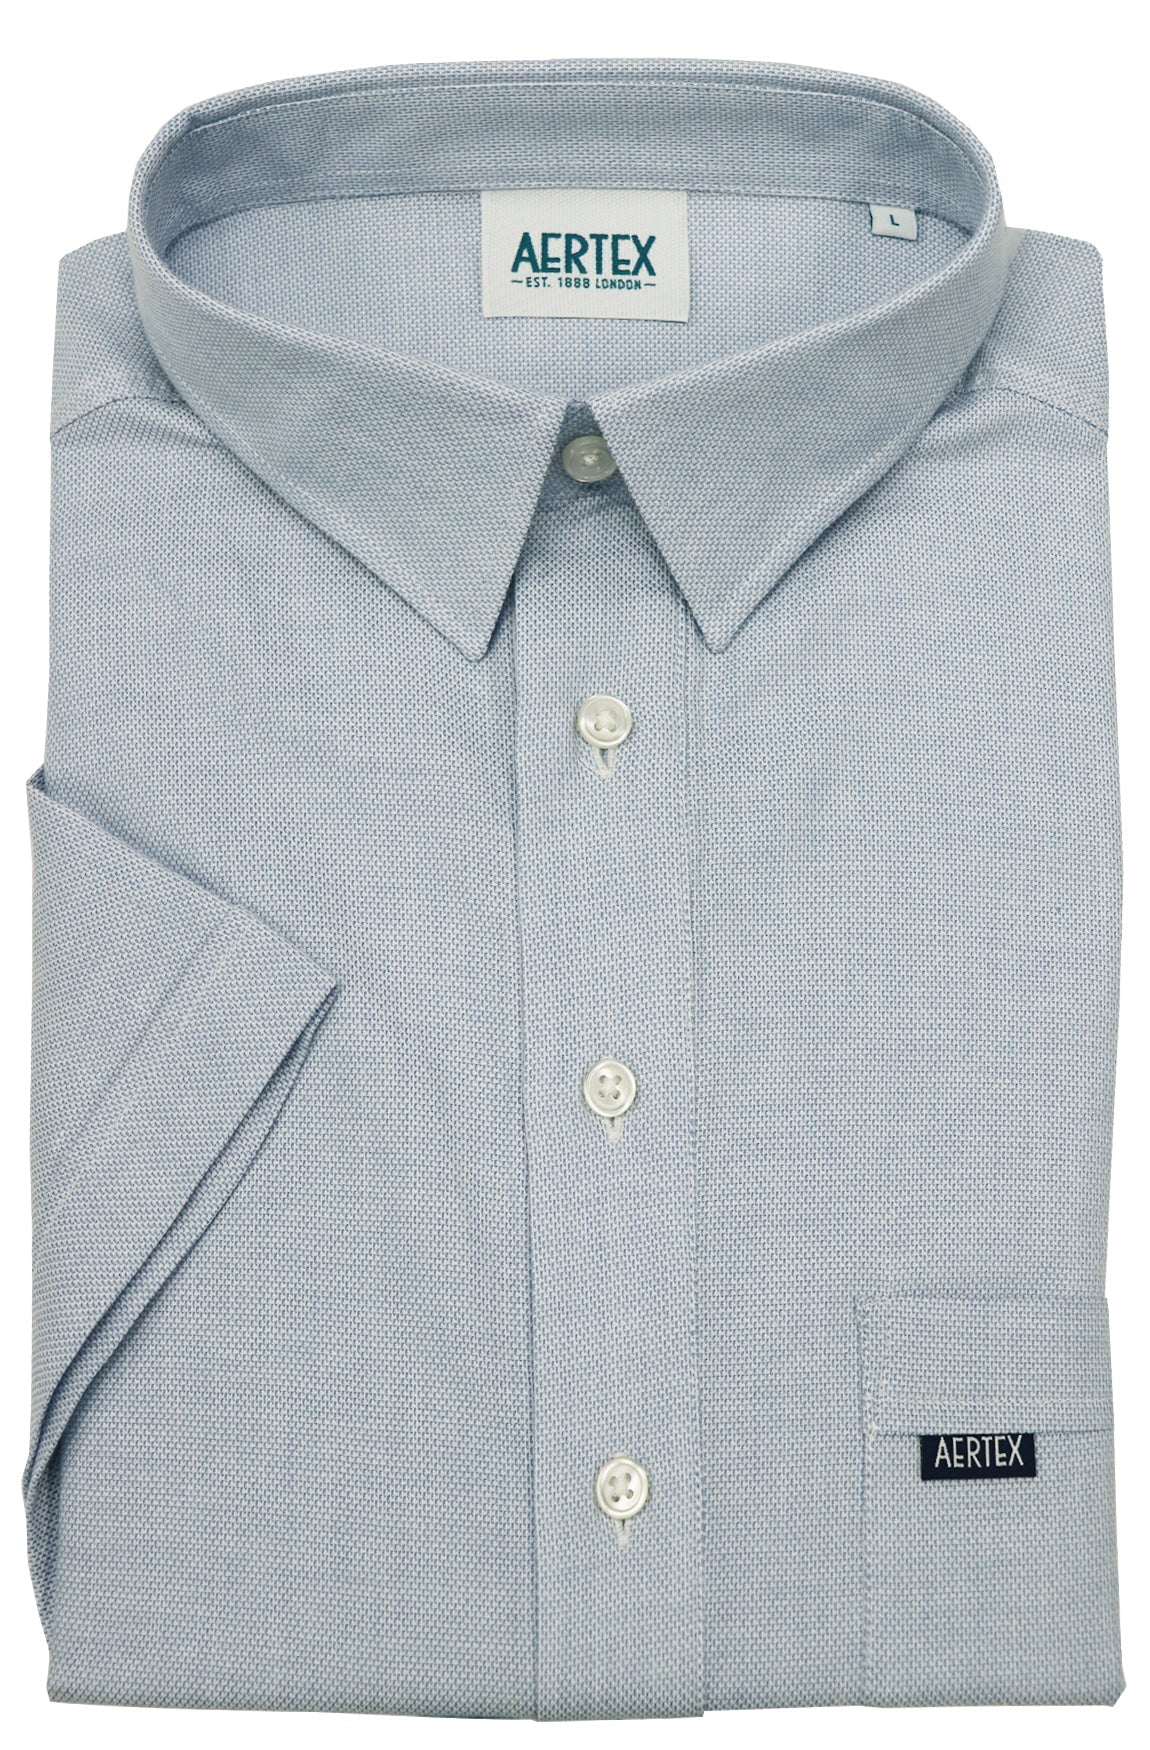 Aertex 88405 Taunton Polo - Thomson's Suits Ltd - Blue - S - 5313